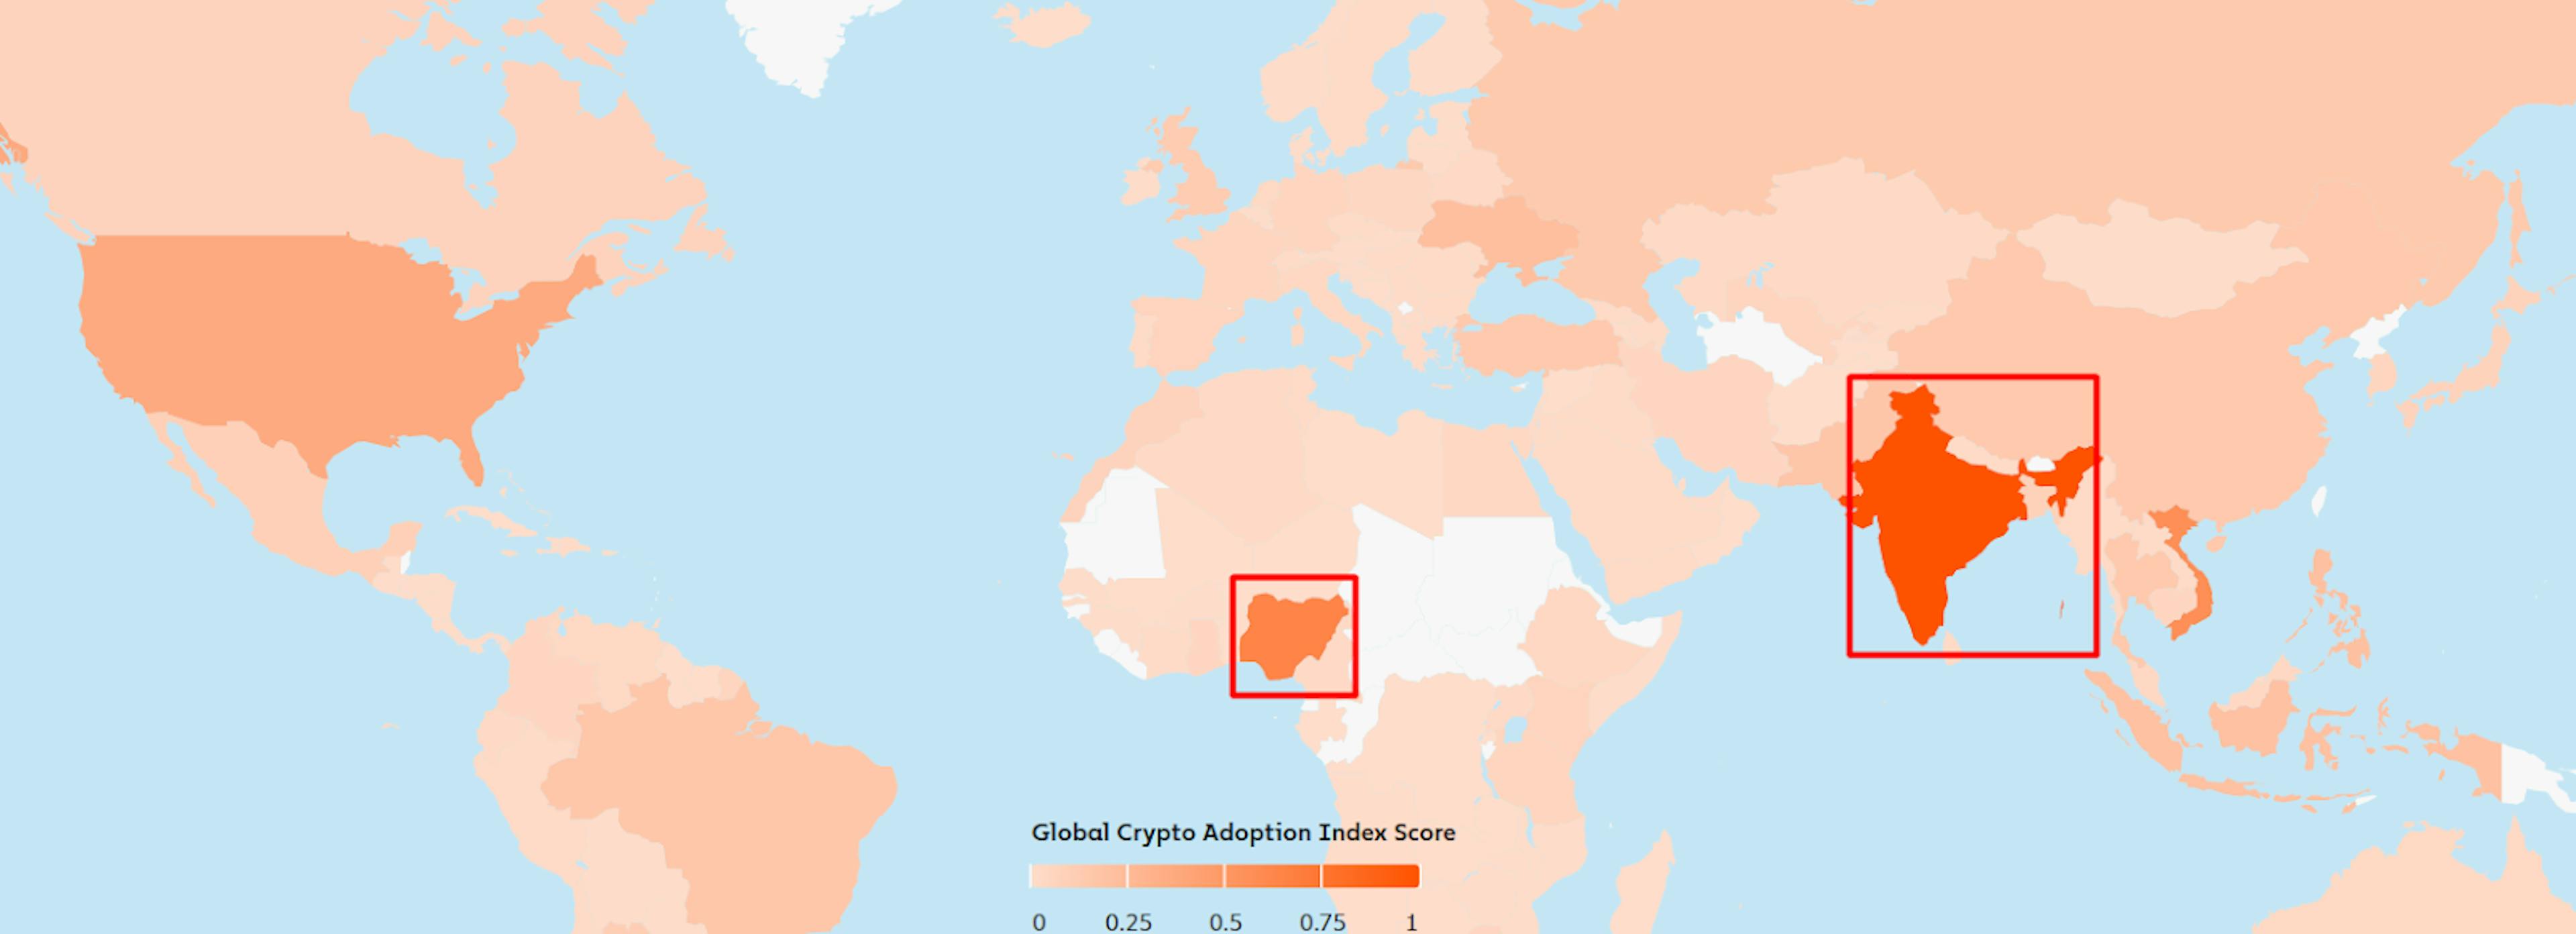 Source : https://www.chainalysis.com/blog/2023-global-crypto-adoption-index/#top20